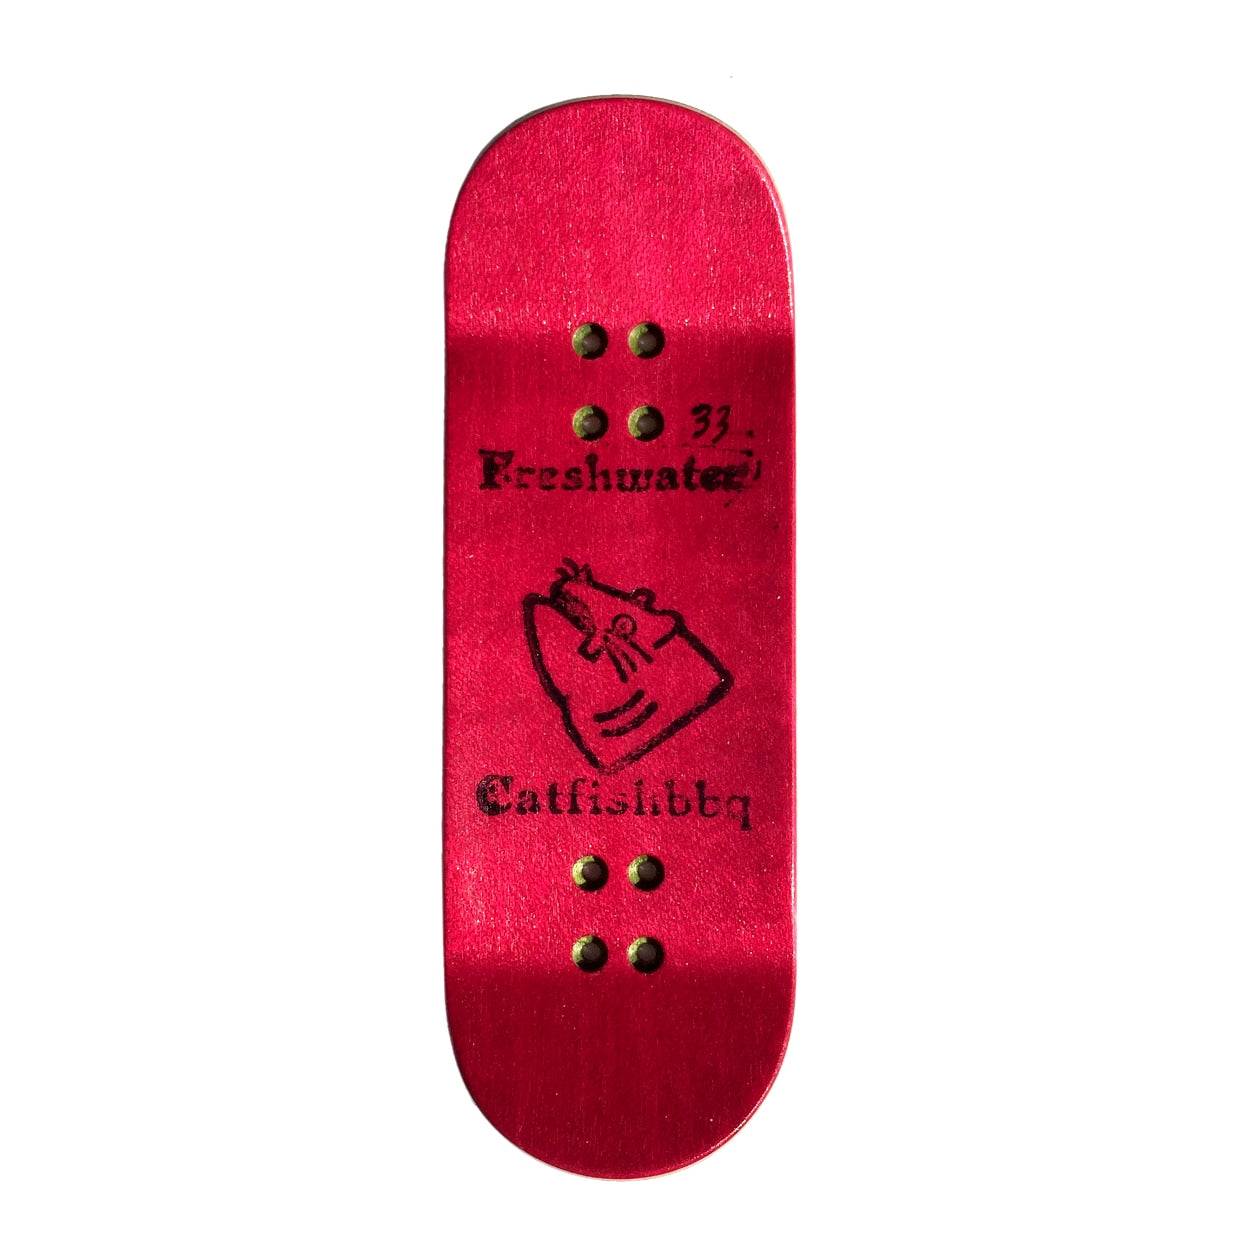 Catfishbbq Blood Dragon Fingerboard Deck - Red